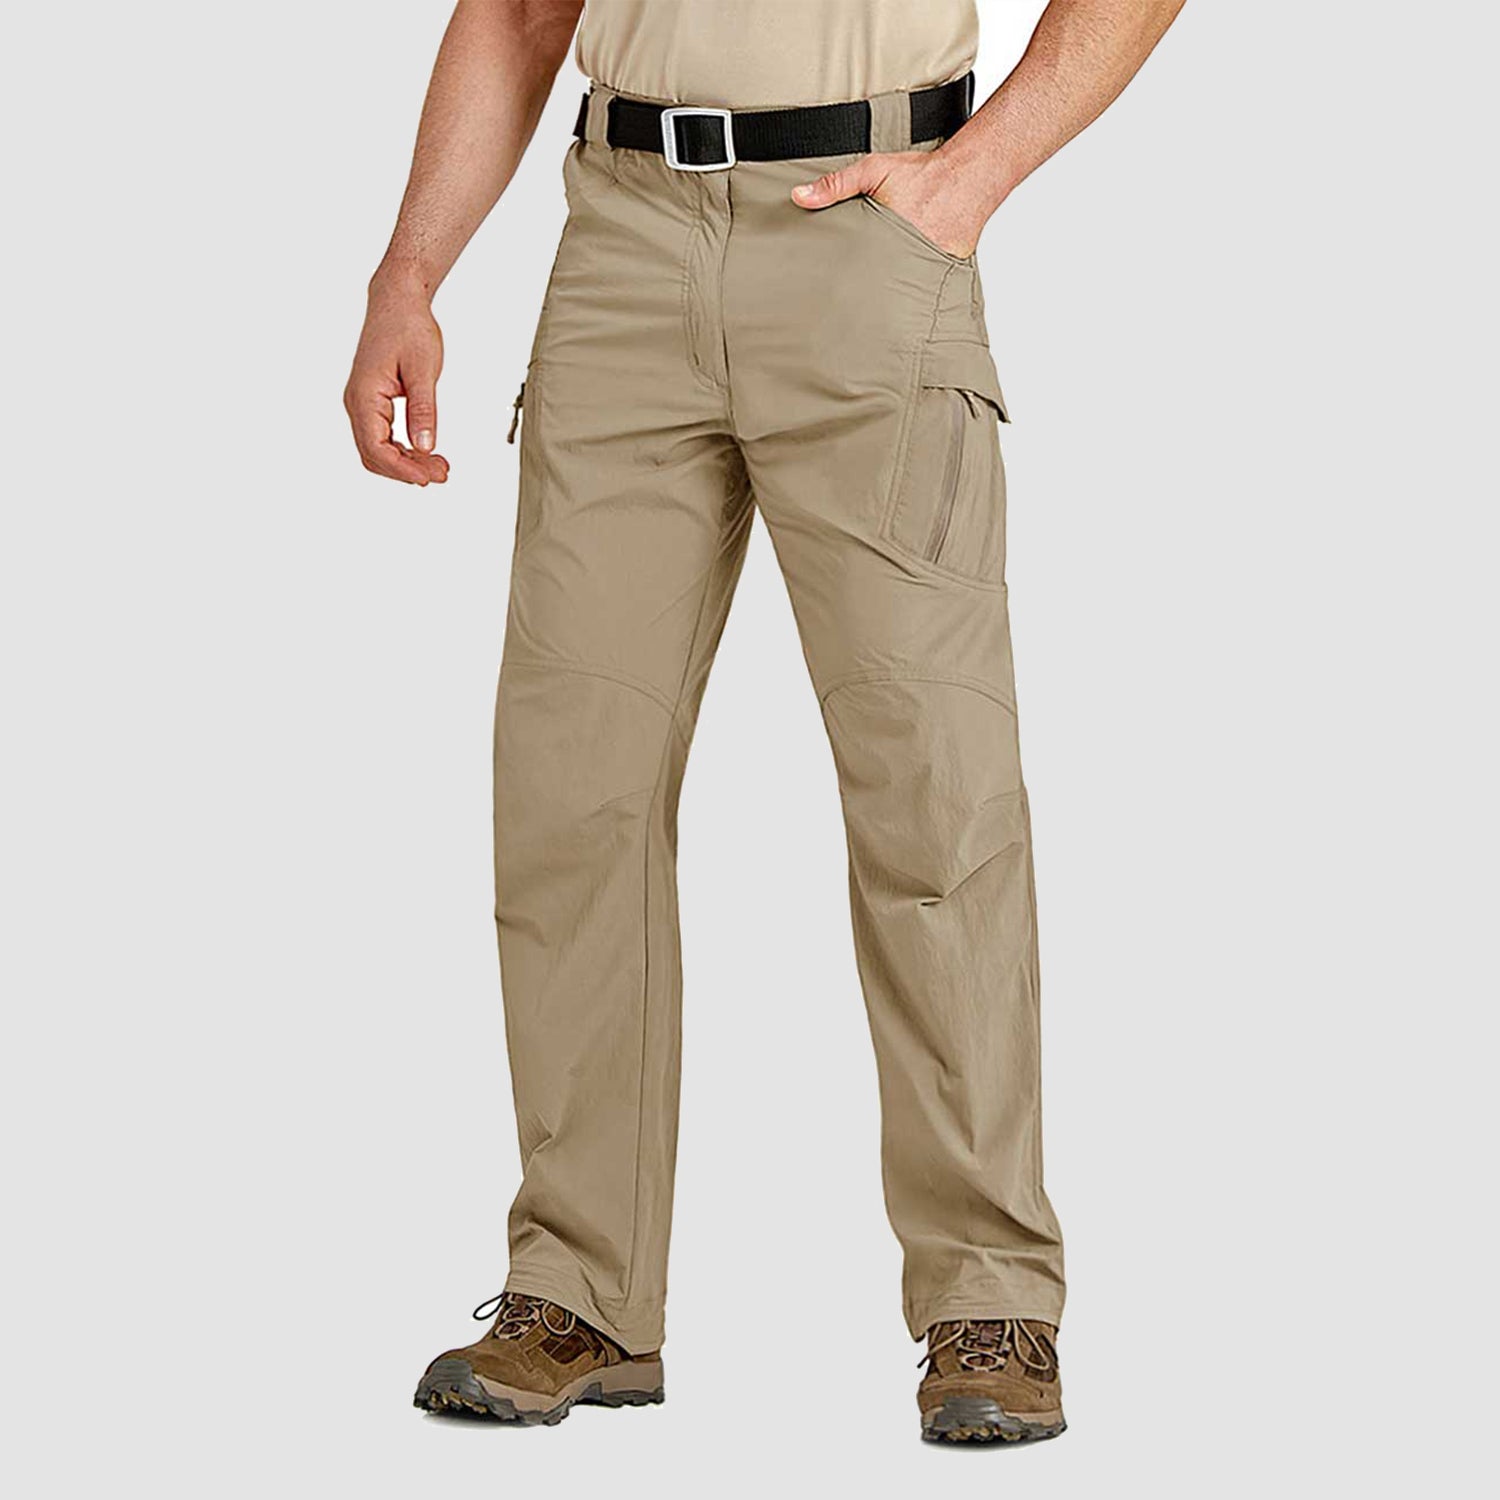 5.11 Tactical Men's Stryke Pants, Lightweight Cargo Pants